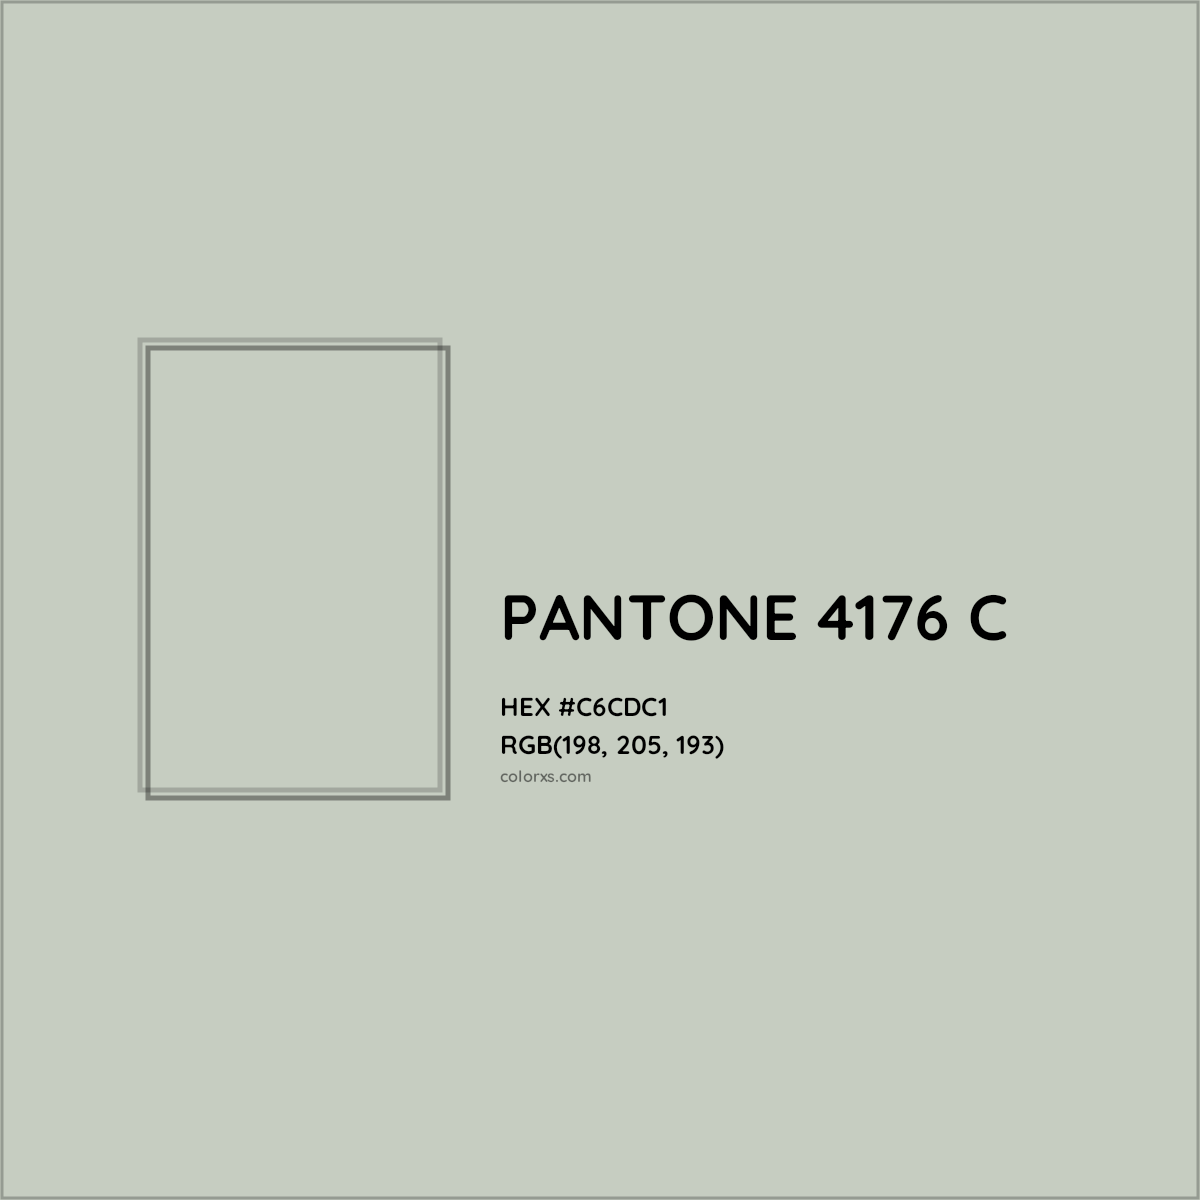 HEX #C6CDC1 PANTONE 4176 C CMS Pantone PMS - Color Code